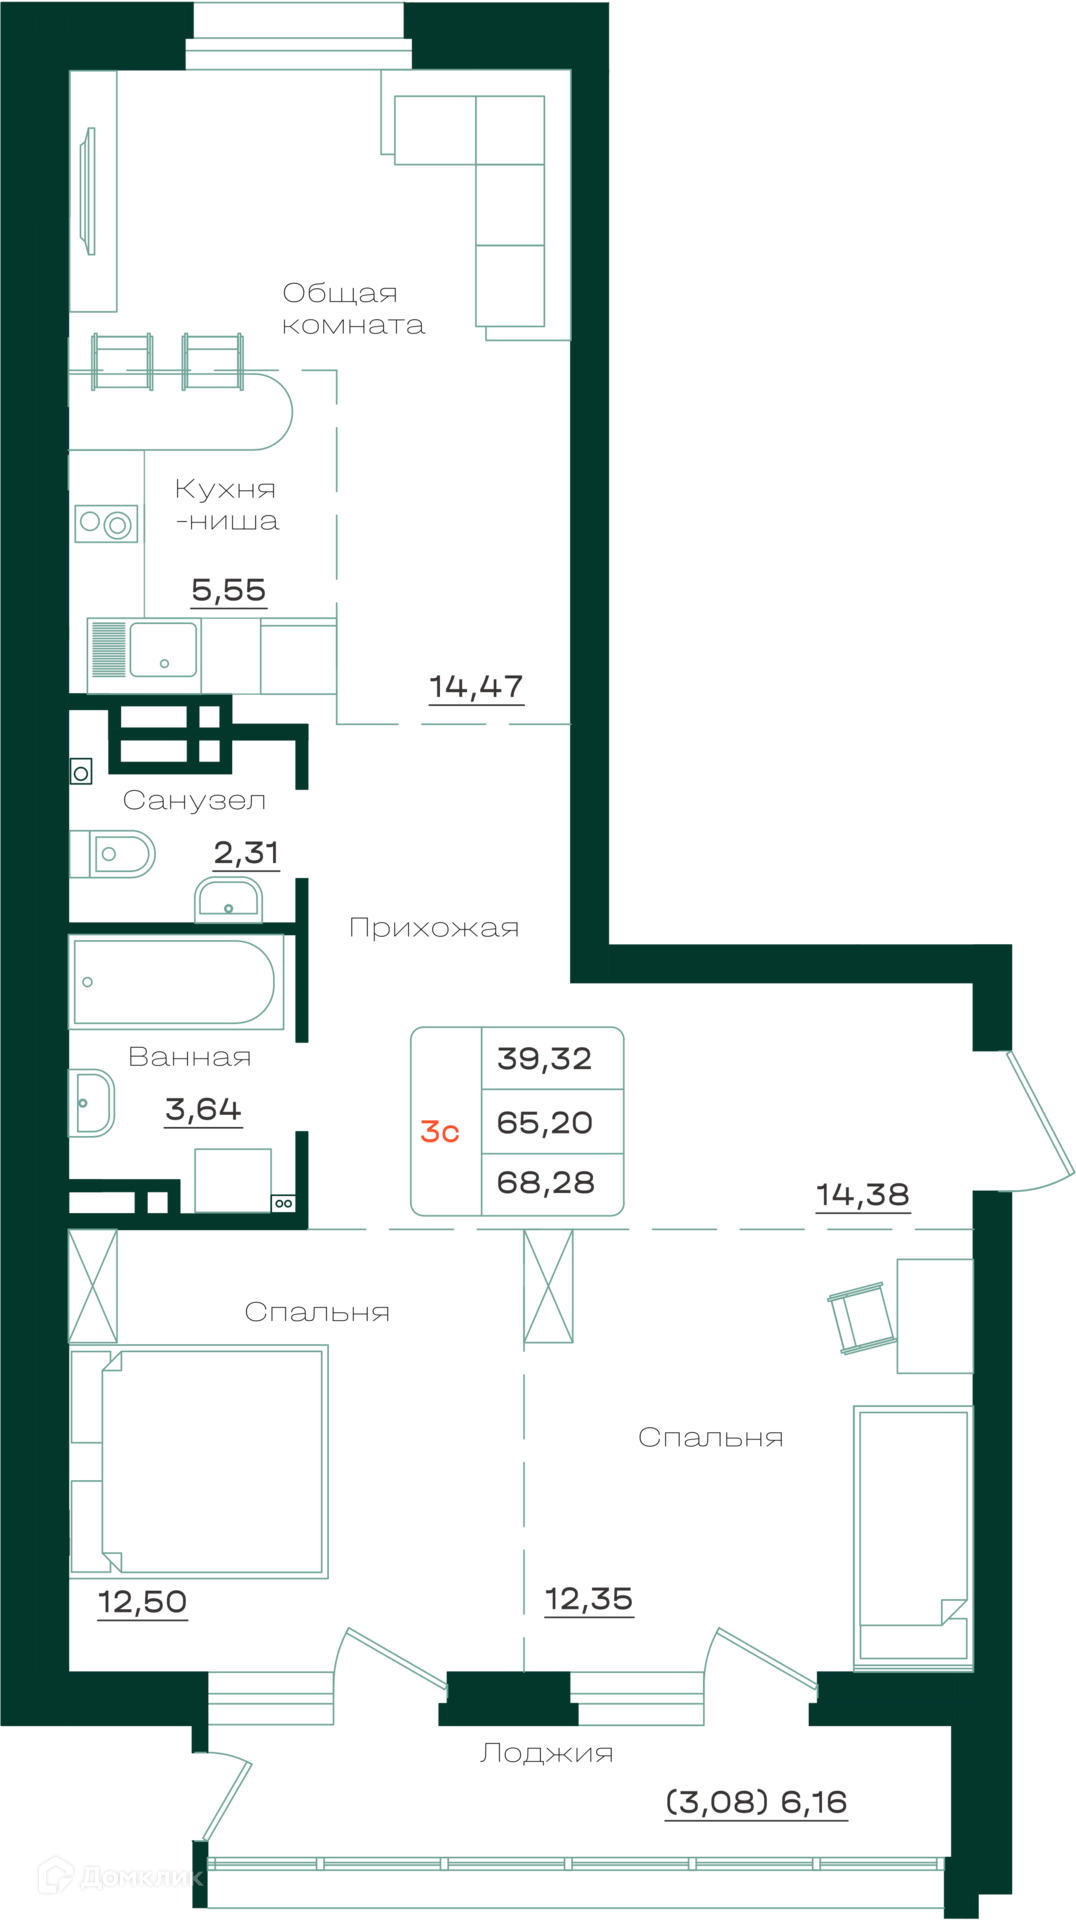 3-комнатная квартира 68.28м2 ЖК Локомотив